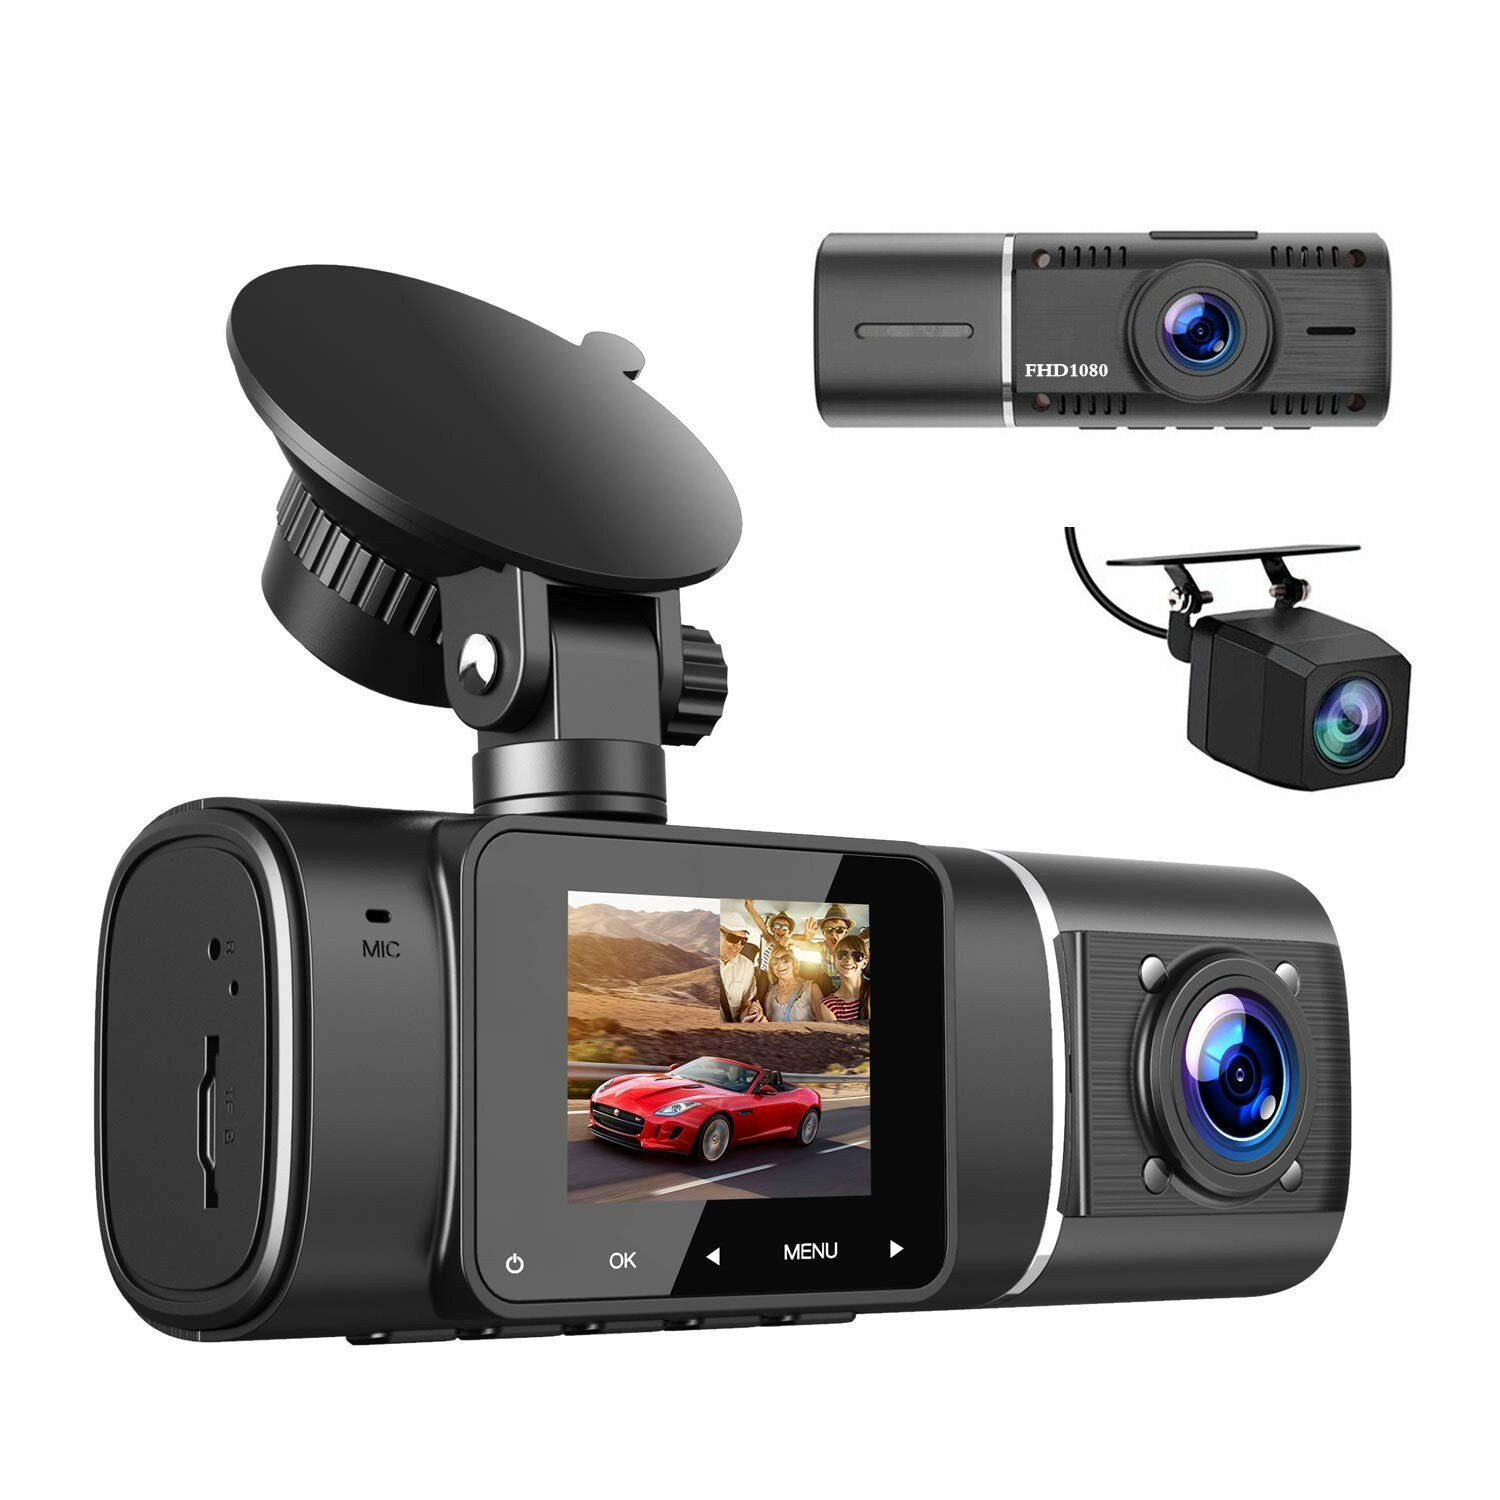 J02 Dach cam 前1080P 內1080P 行車記錄儀 dash cam「限時特惠」